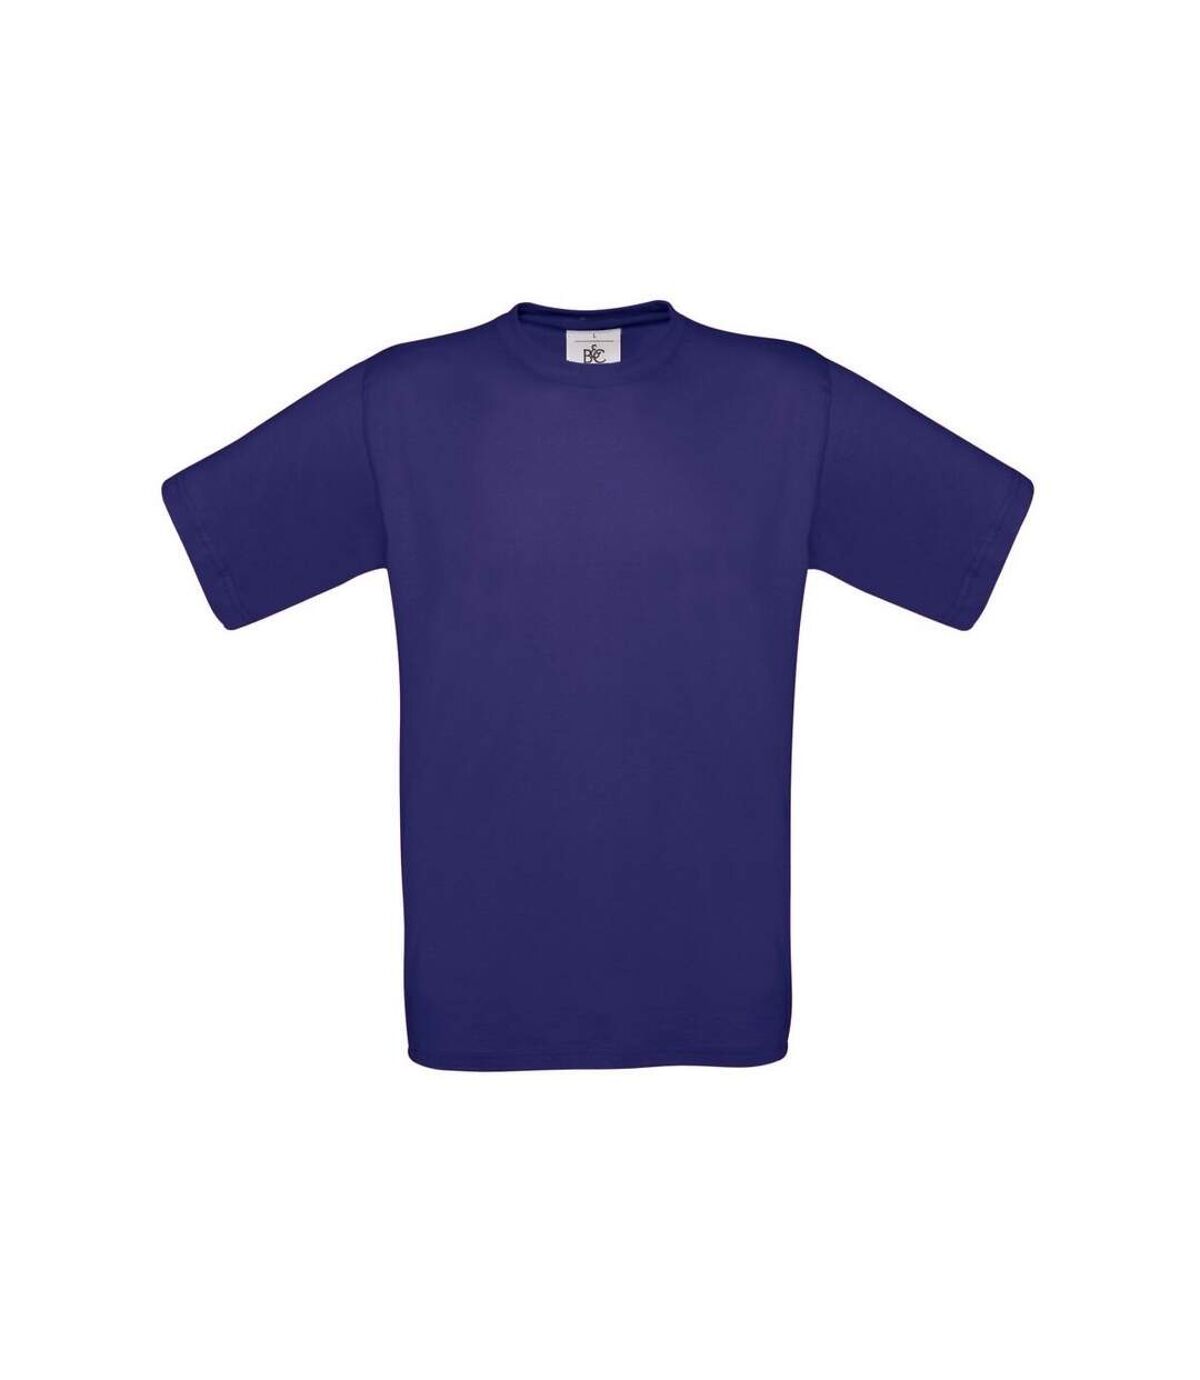 B&C Exact 190 Mens Crew Neck Short Sleeve T-Shirt (Royal Blue) - UTBC125